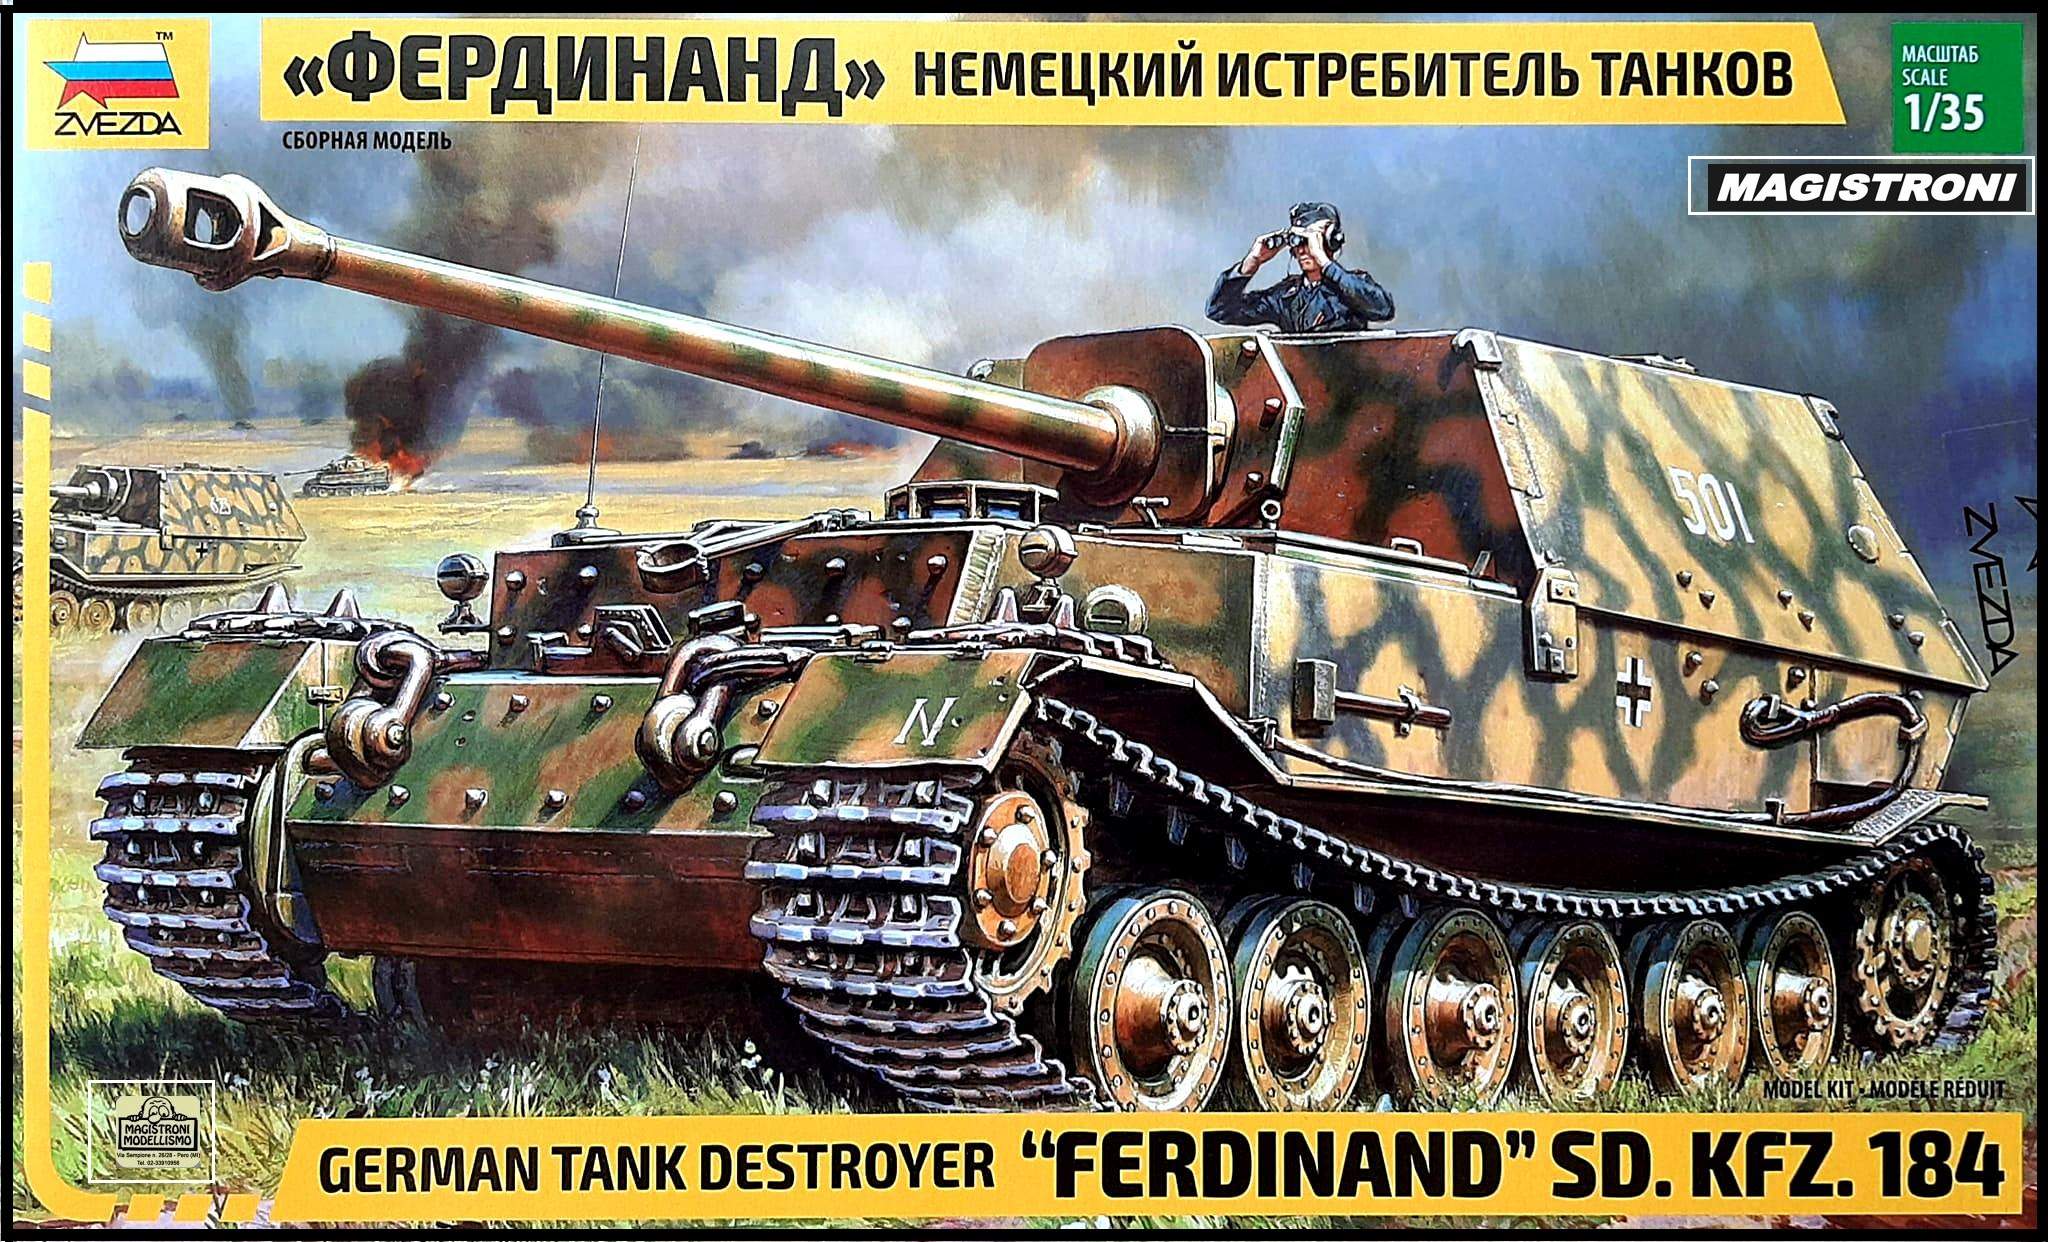 GERMAN TANK DESTROYER "FERDINAND" S.d.Kfz.184